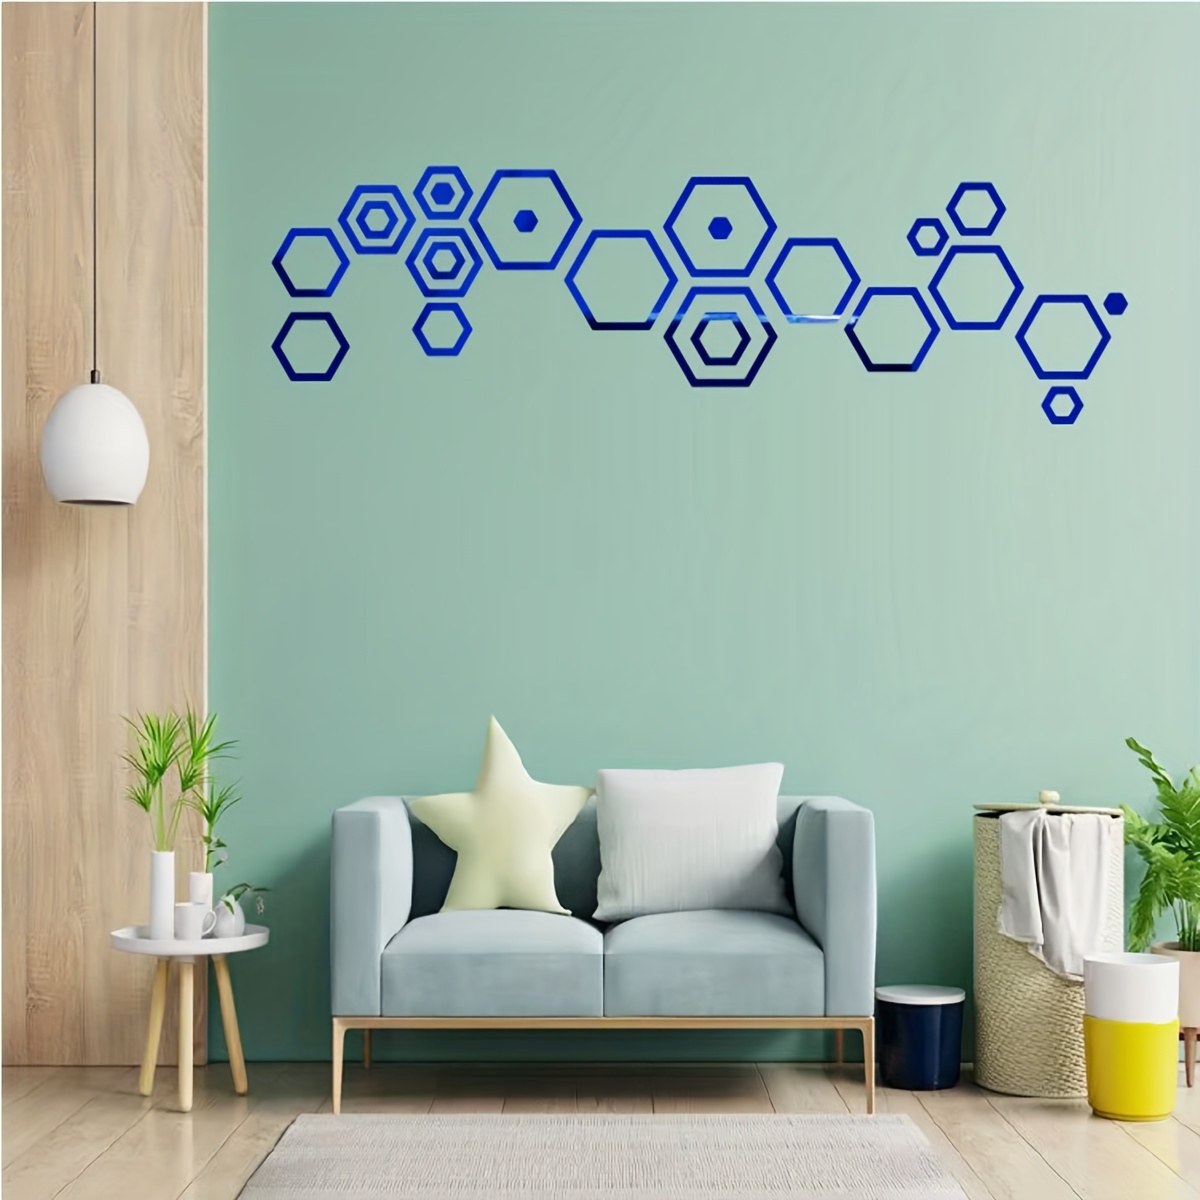 12 Pcs/set Hexagon Mirrors Wall Decor Stickers 3D Acrylic Mirrored  Decorative Sticker Waterproof Home Decor 